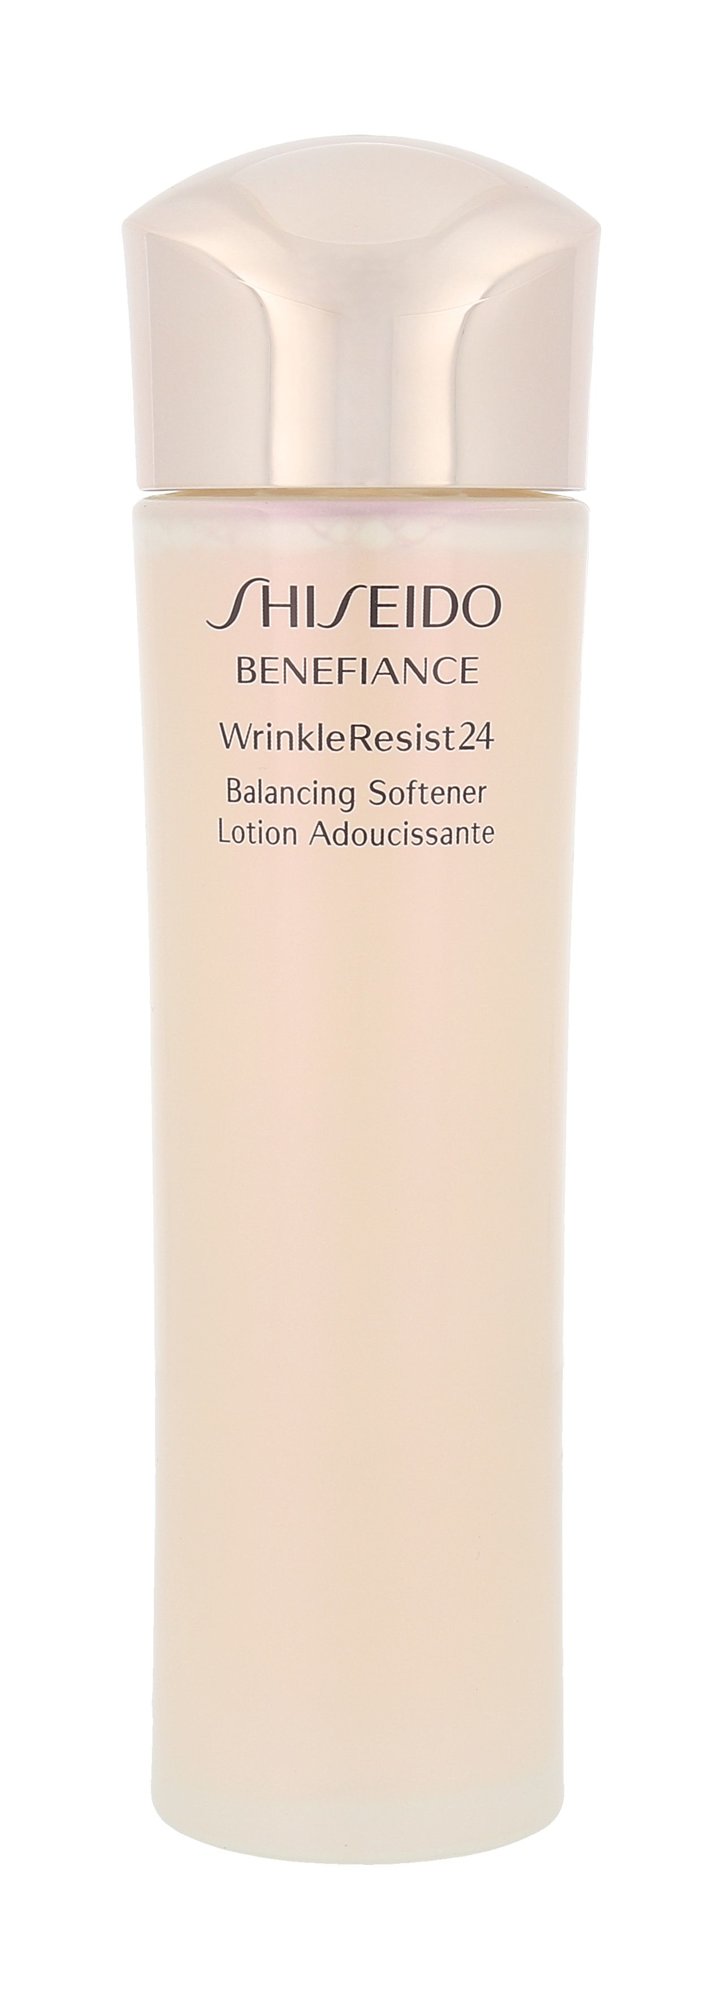 Shiseido Benefiance Wrinkle Resist 24 Balancing Softener 150ml valomasis vanduo veidui